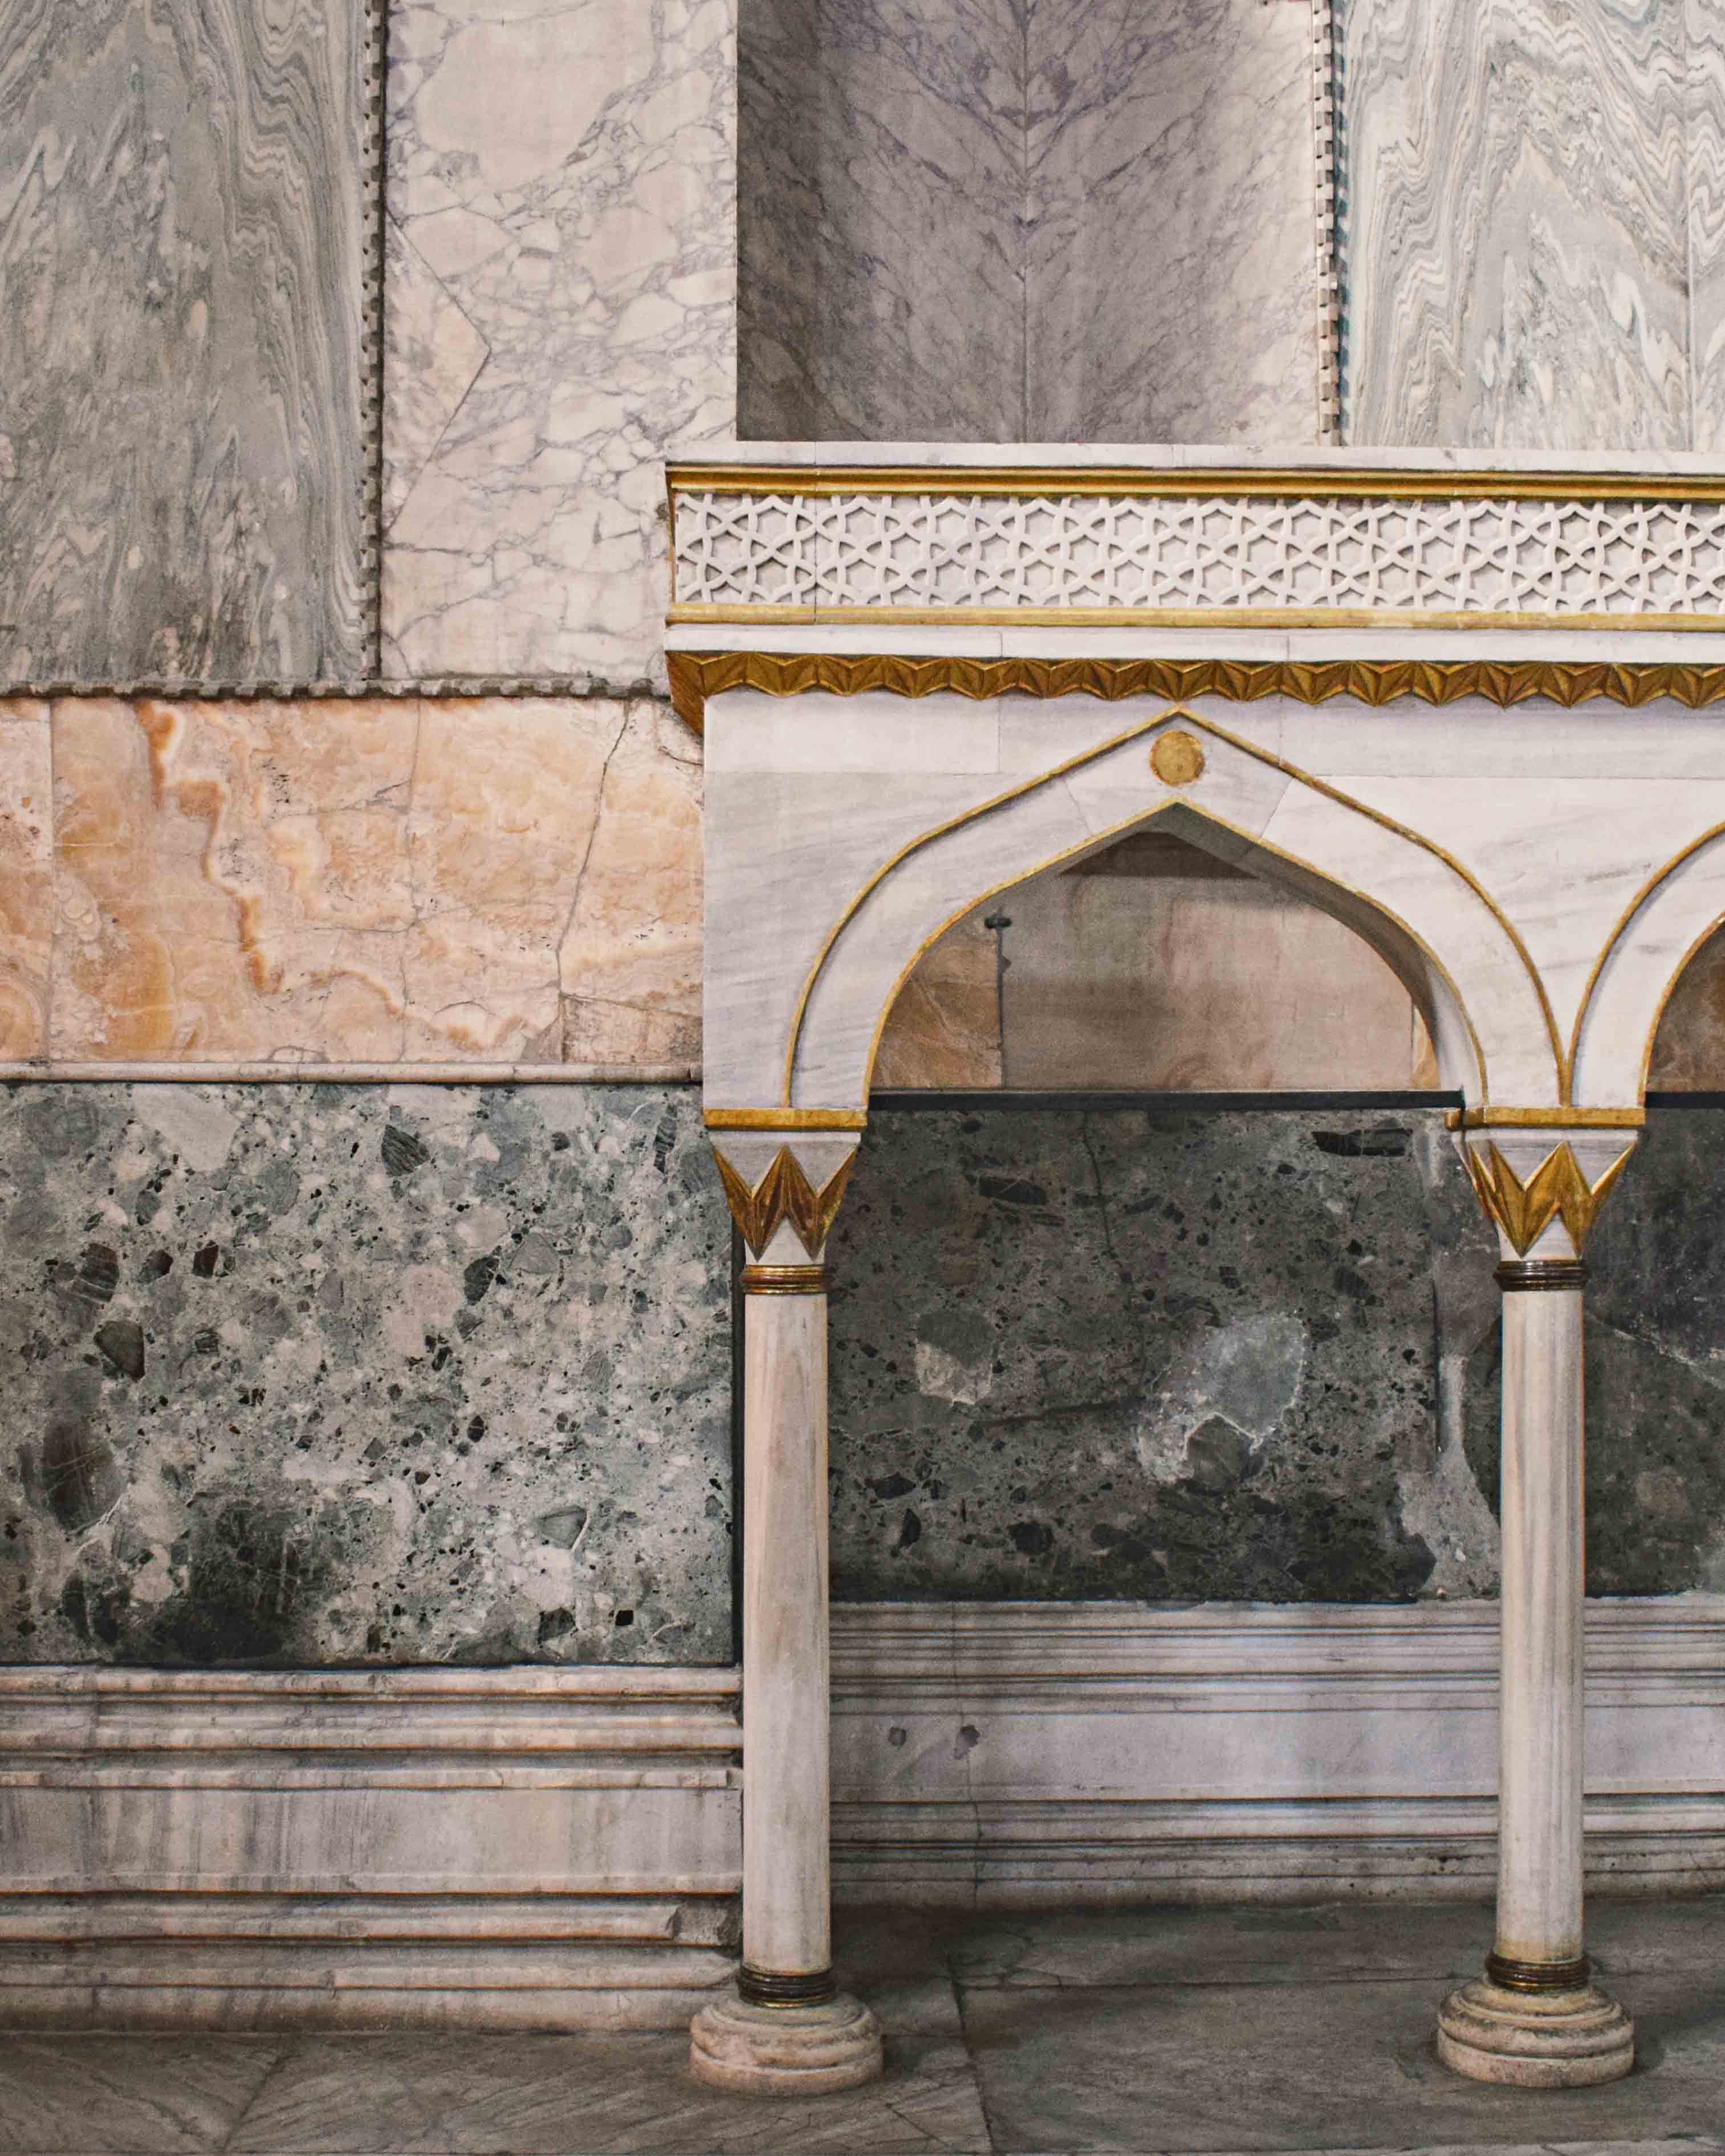 White and gold Islamic design arches inside Hagia Sophia